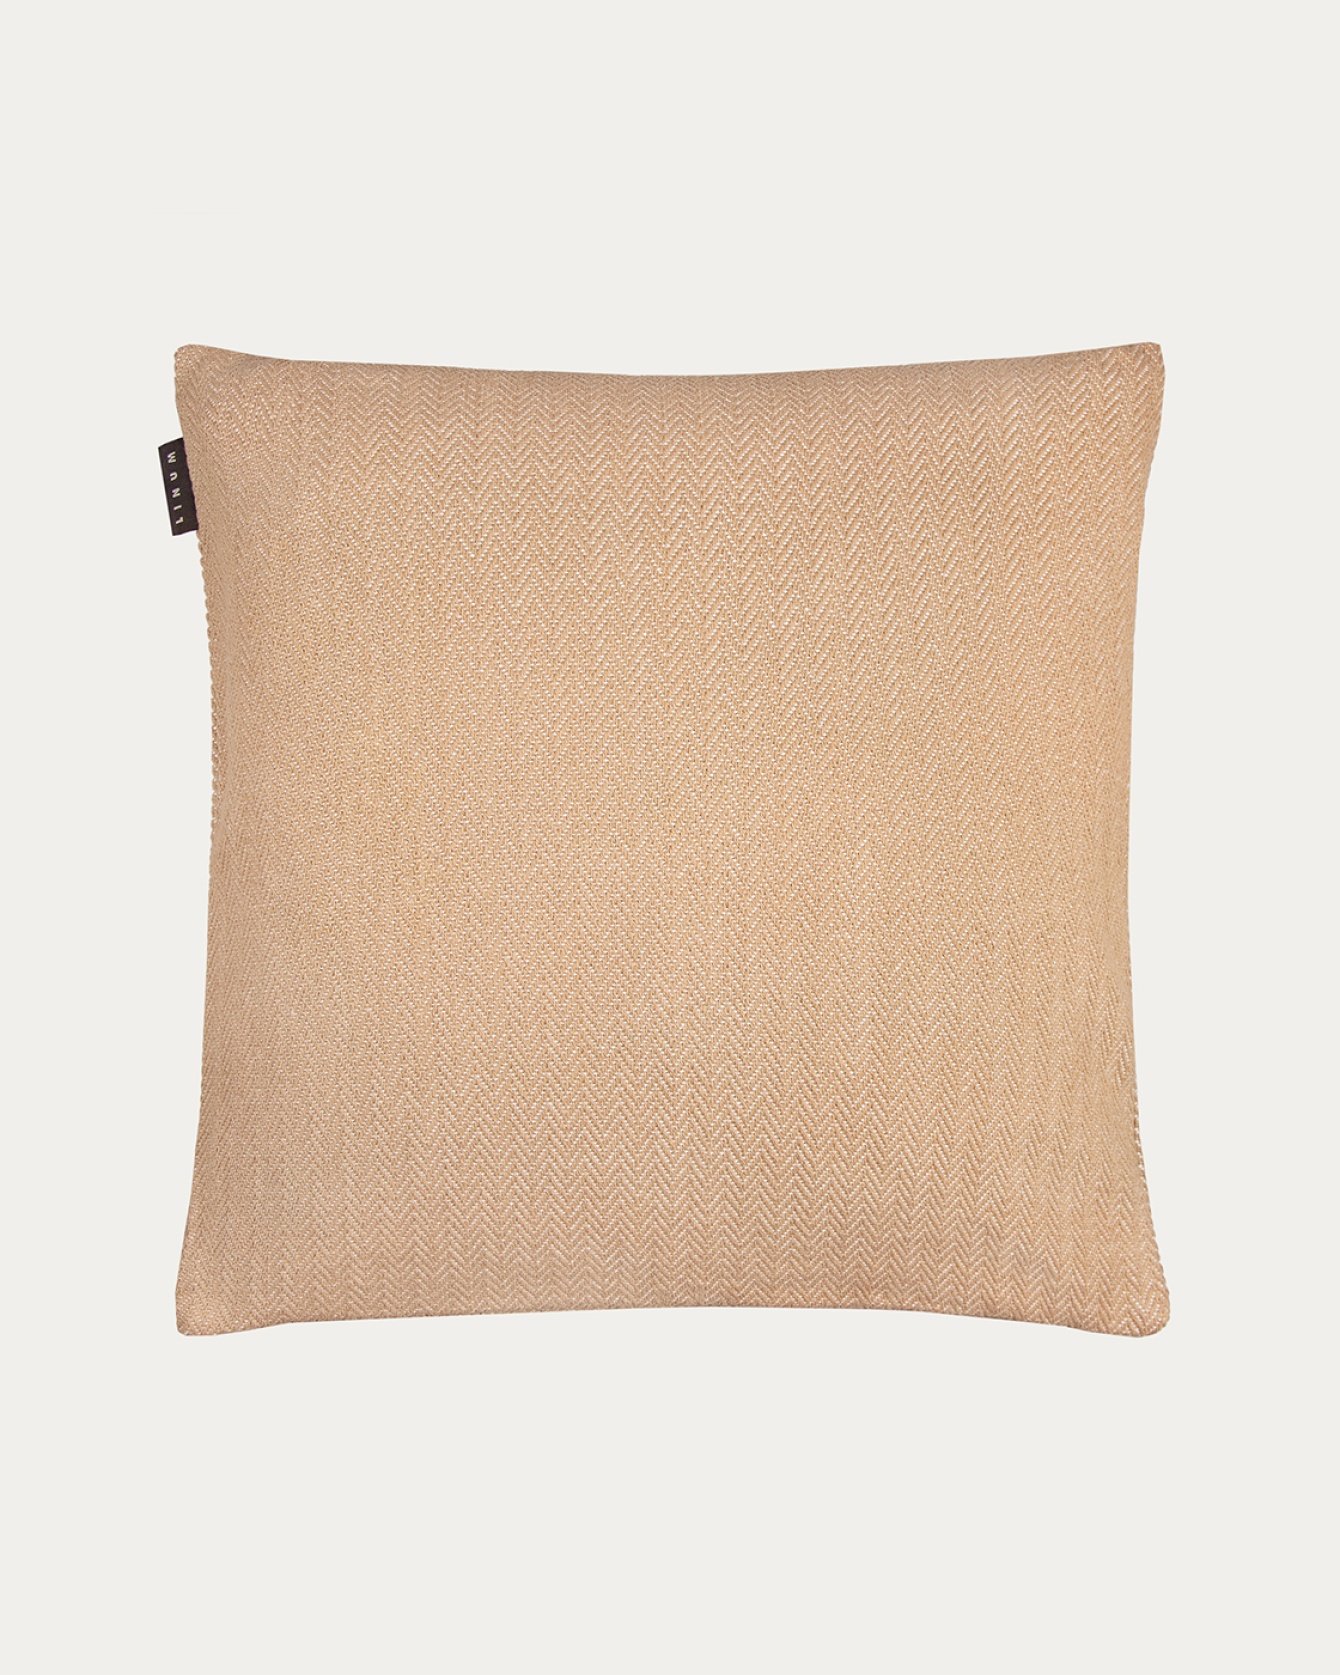 SHEPARD Cushion cover 50x50 cm Camel brown